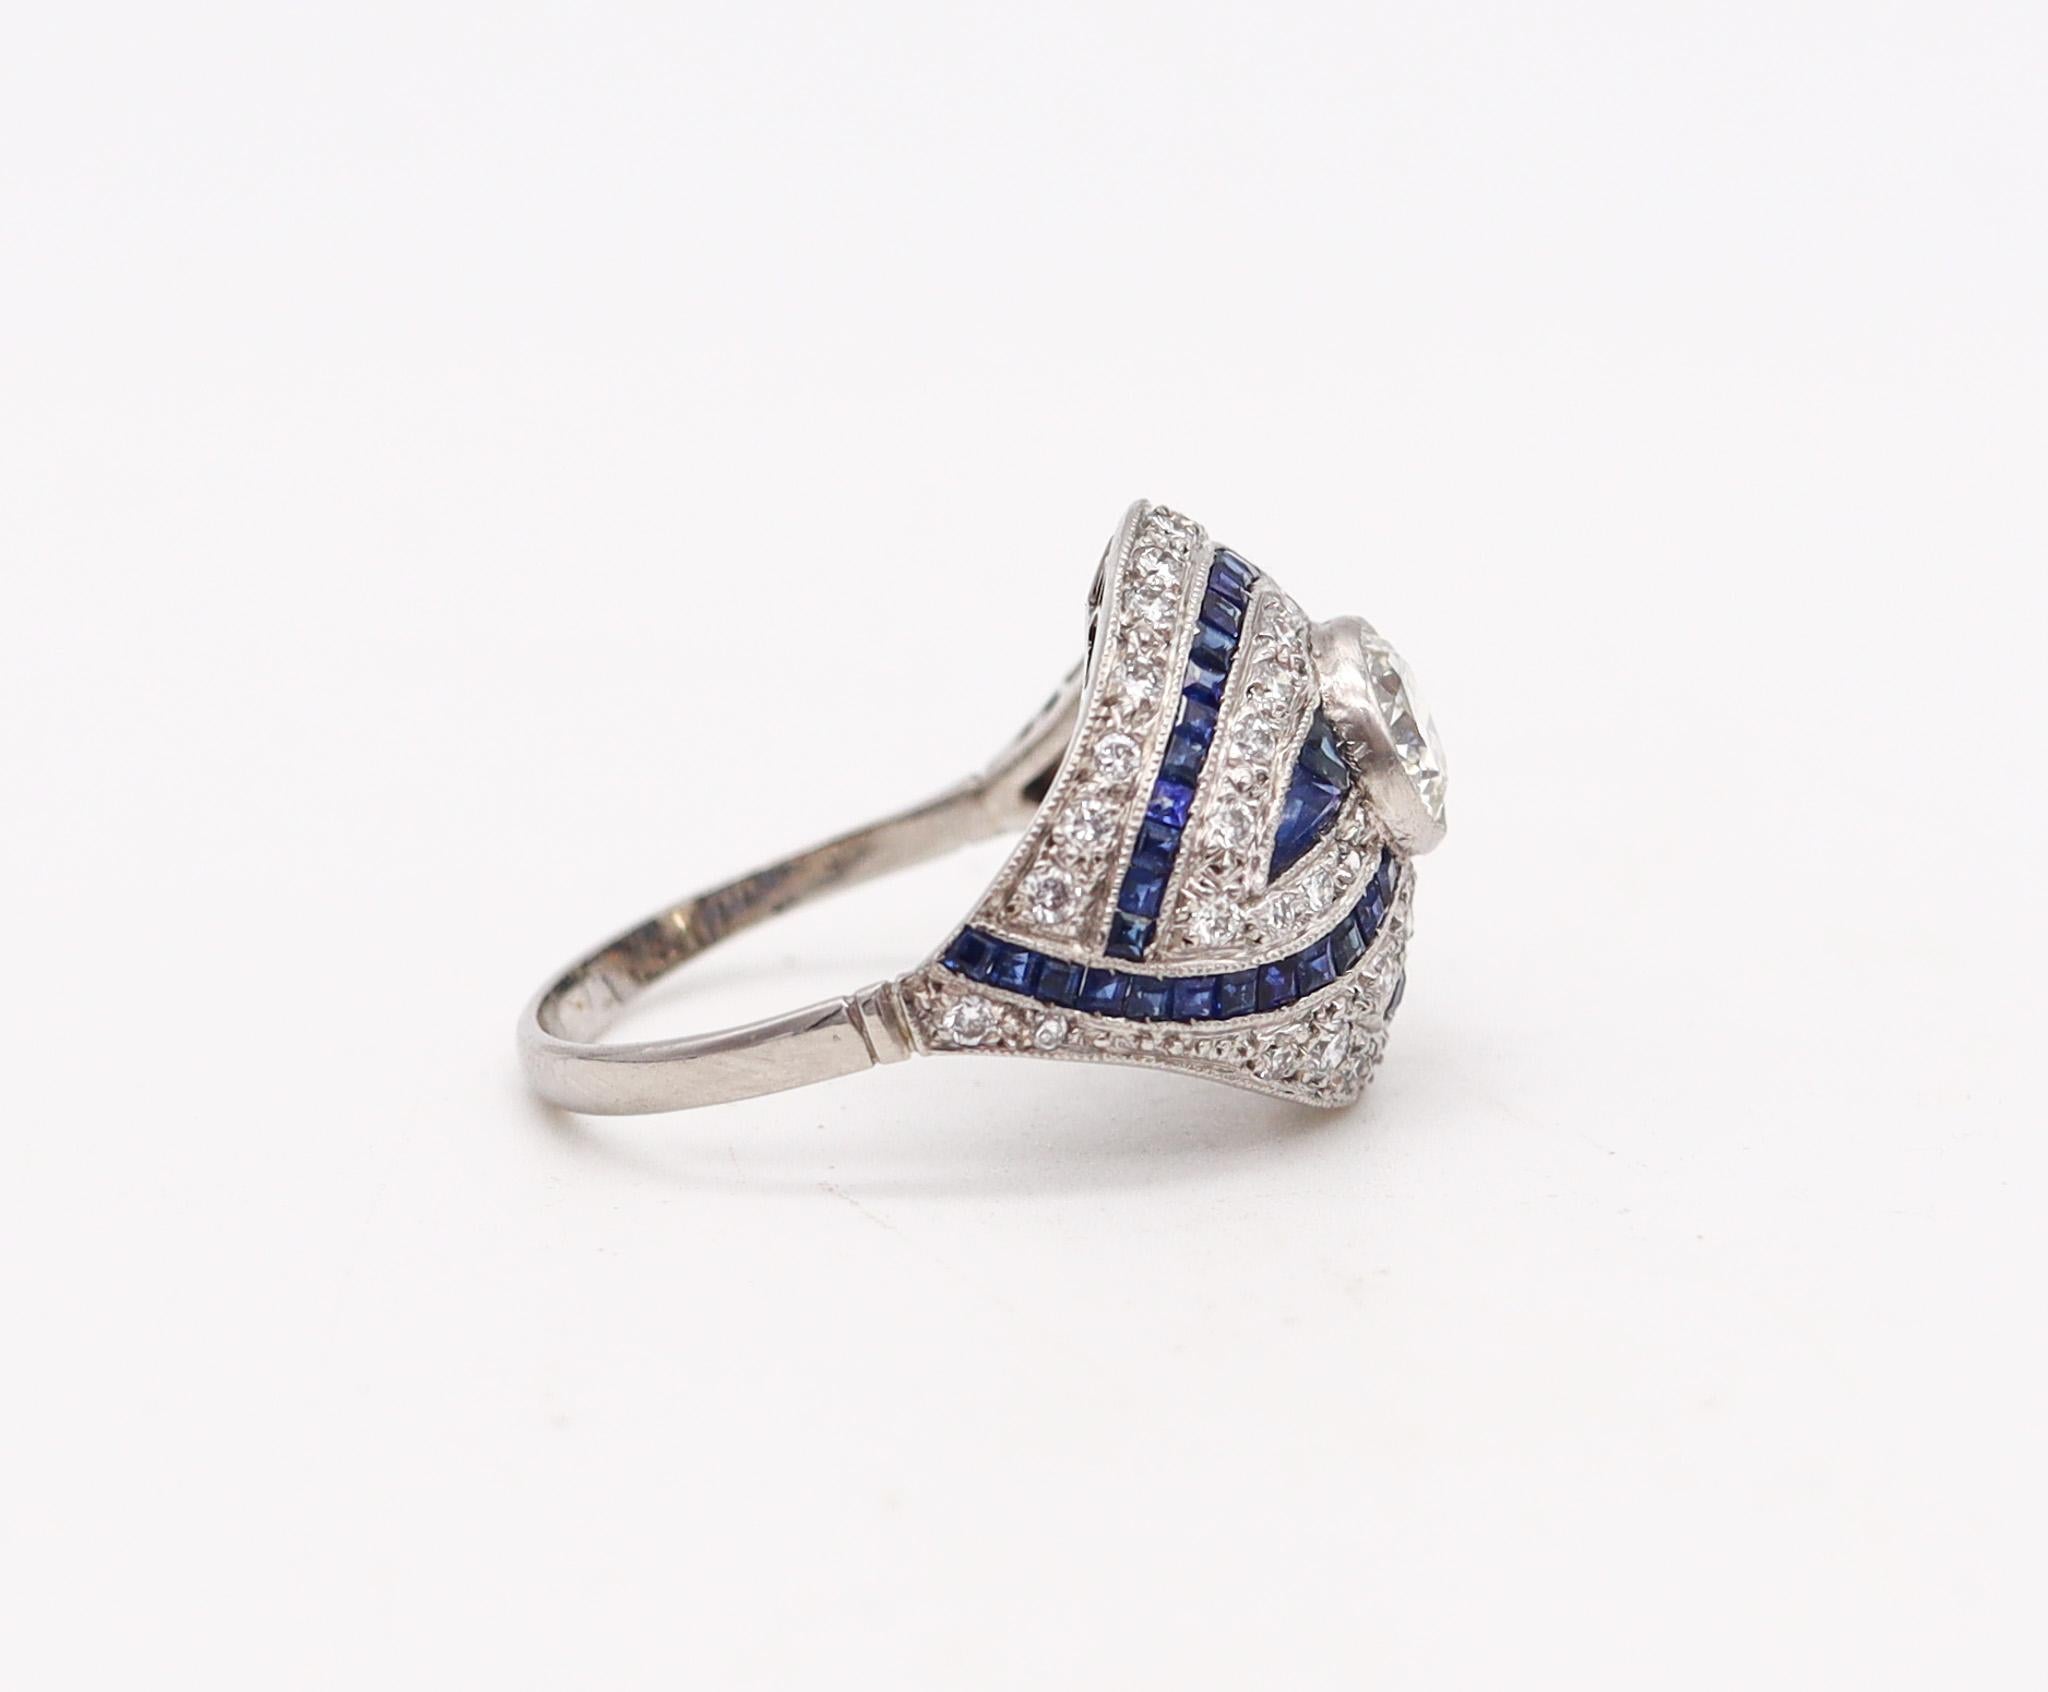 Round Cut Art Deco 1930 Bombe Cocktail Ring In Platinum With 2.85 Ctw Diamonds & Sapphires